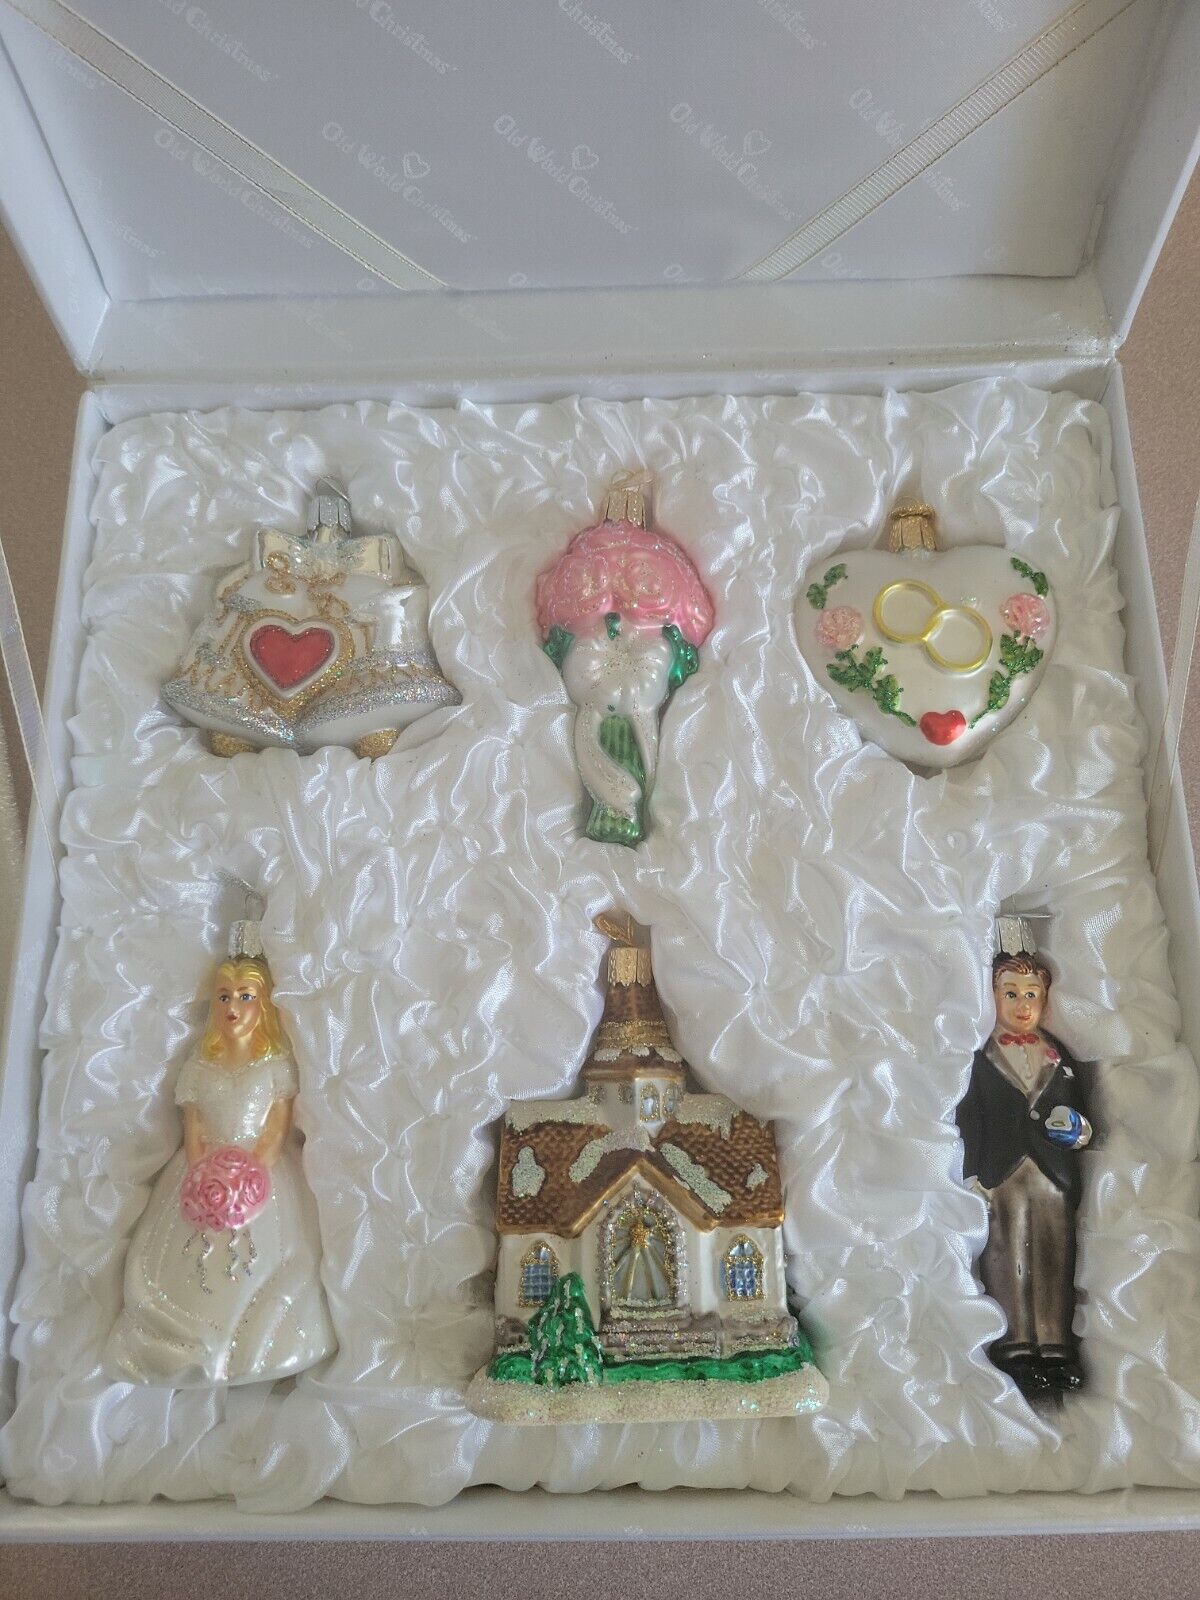 Old World Christmas Wedding Day 6 Piece Set in Original Box ~ Hand Blown Glass 